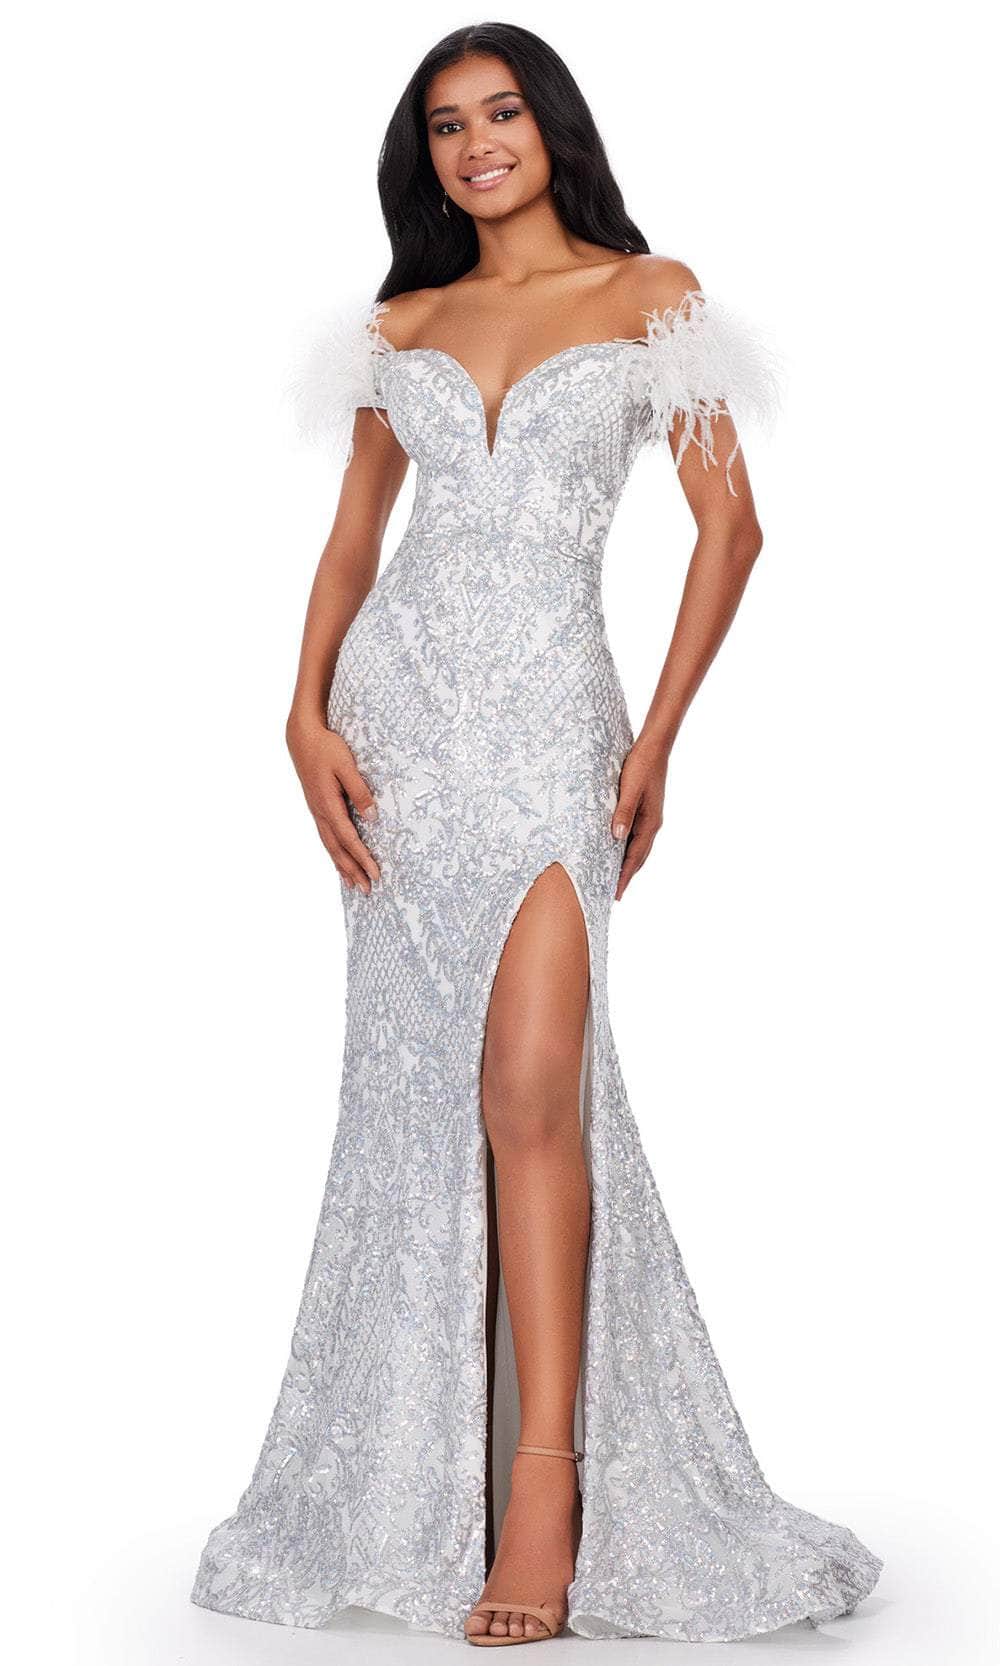 Ashley Lauren 11463 - Sequin Motif Prom Dress 00 /  Silver / Ivory